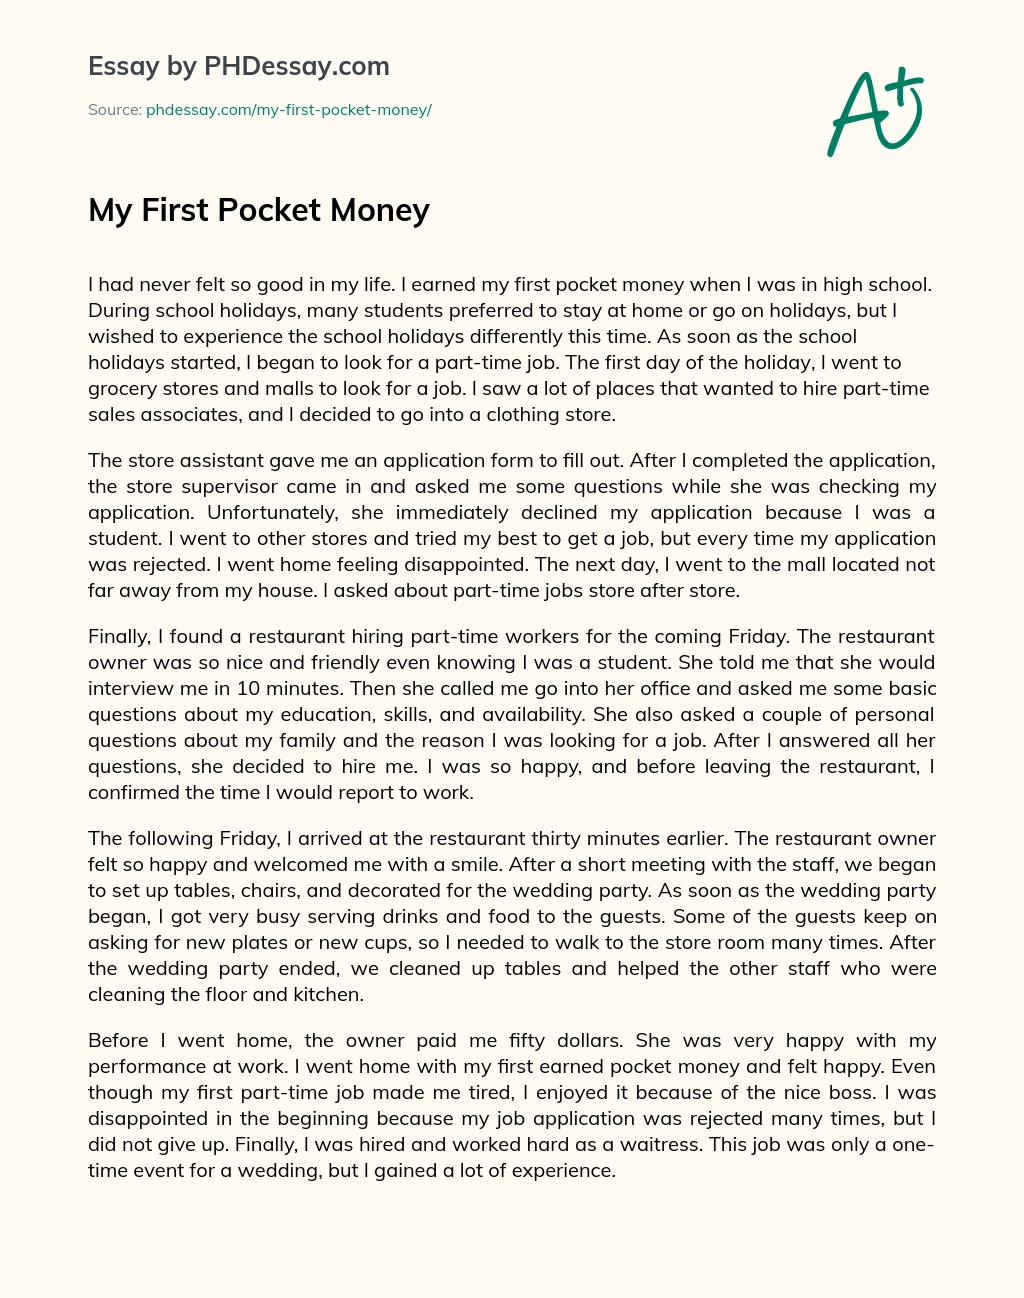 essay on my first pocket money